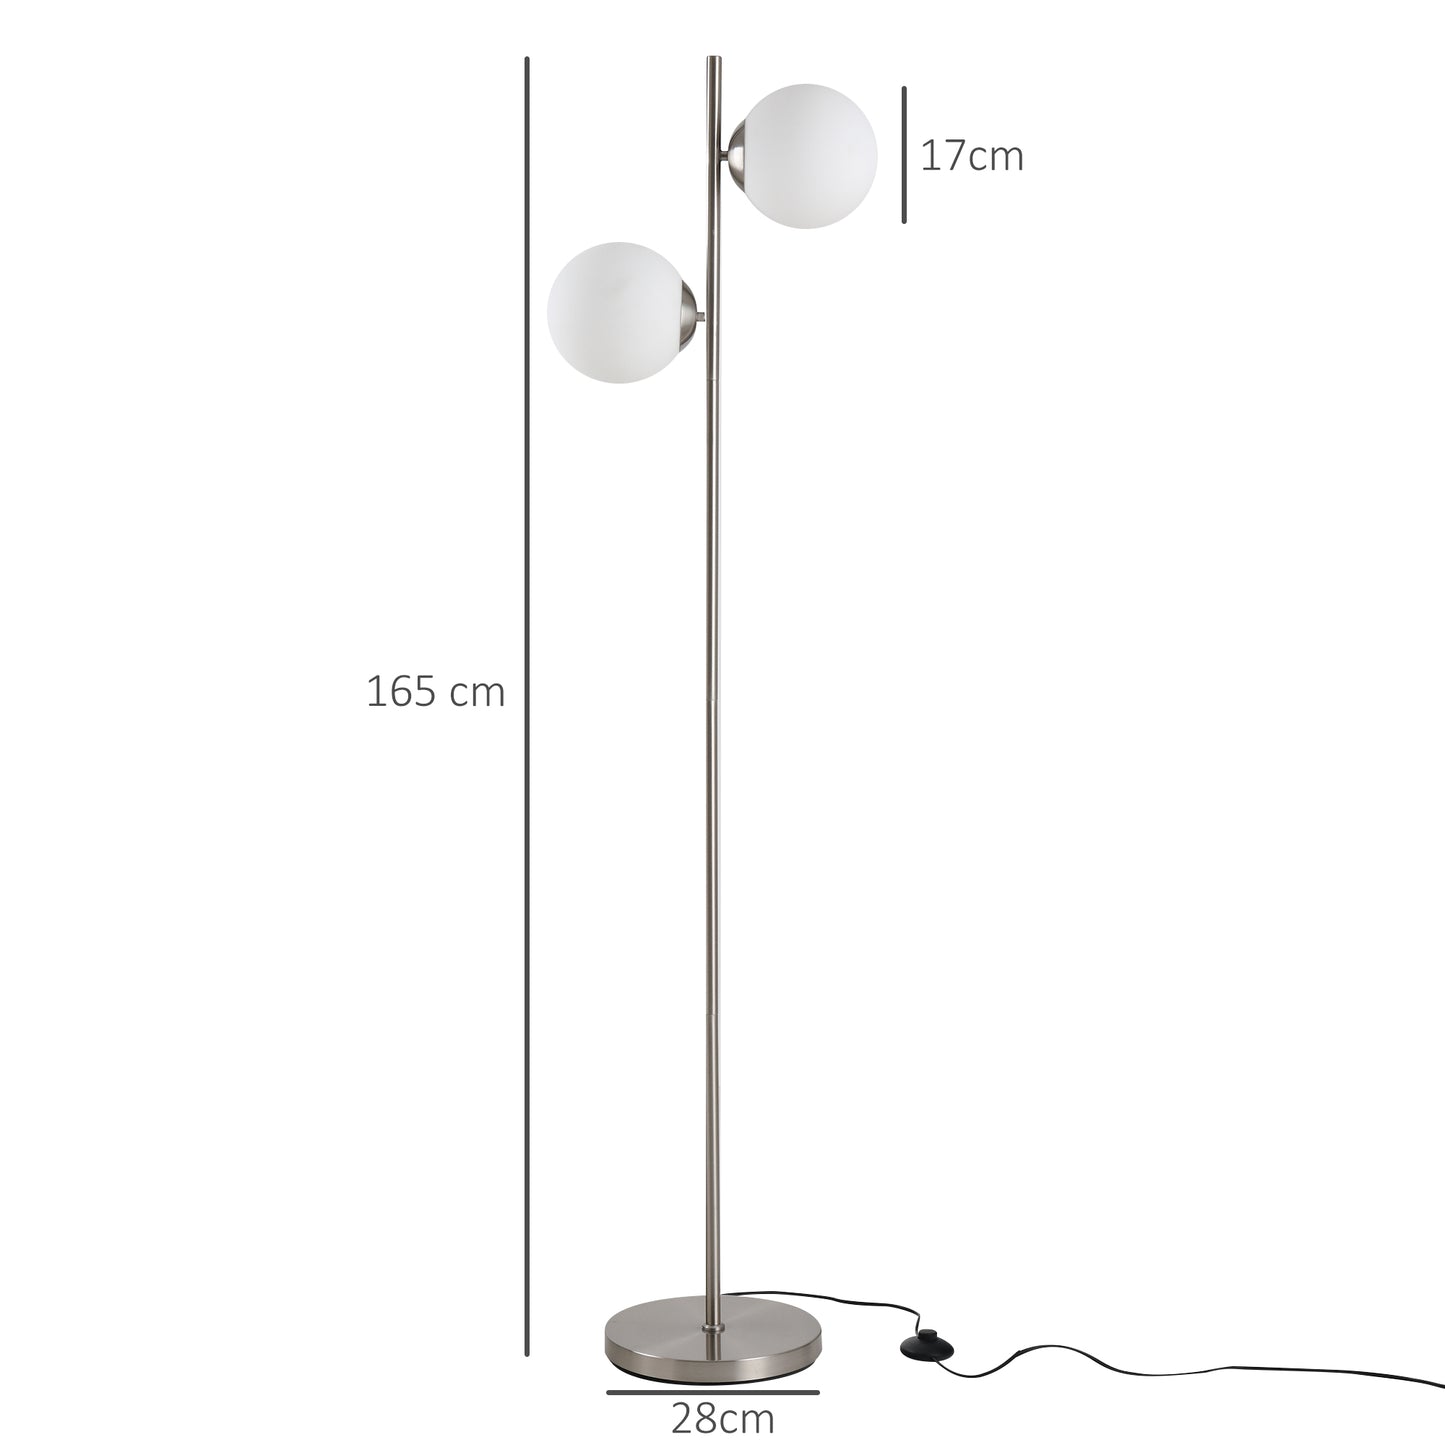 HOMCOM 2 Glass Shade Floor Lamp Metal Pole Modern Decorative w/ Floor Switch Silver